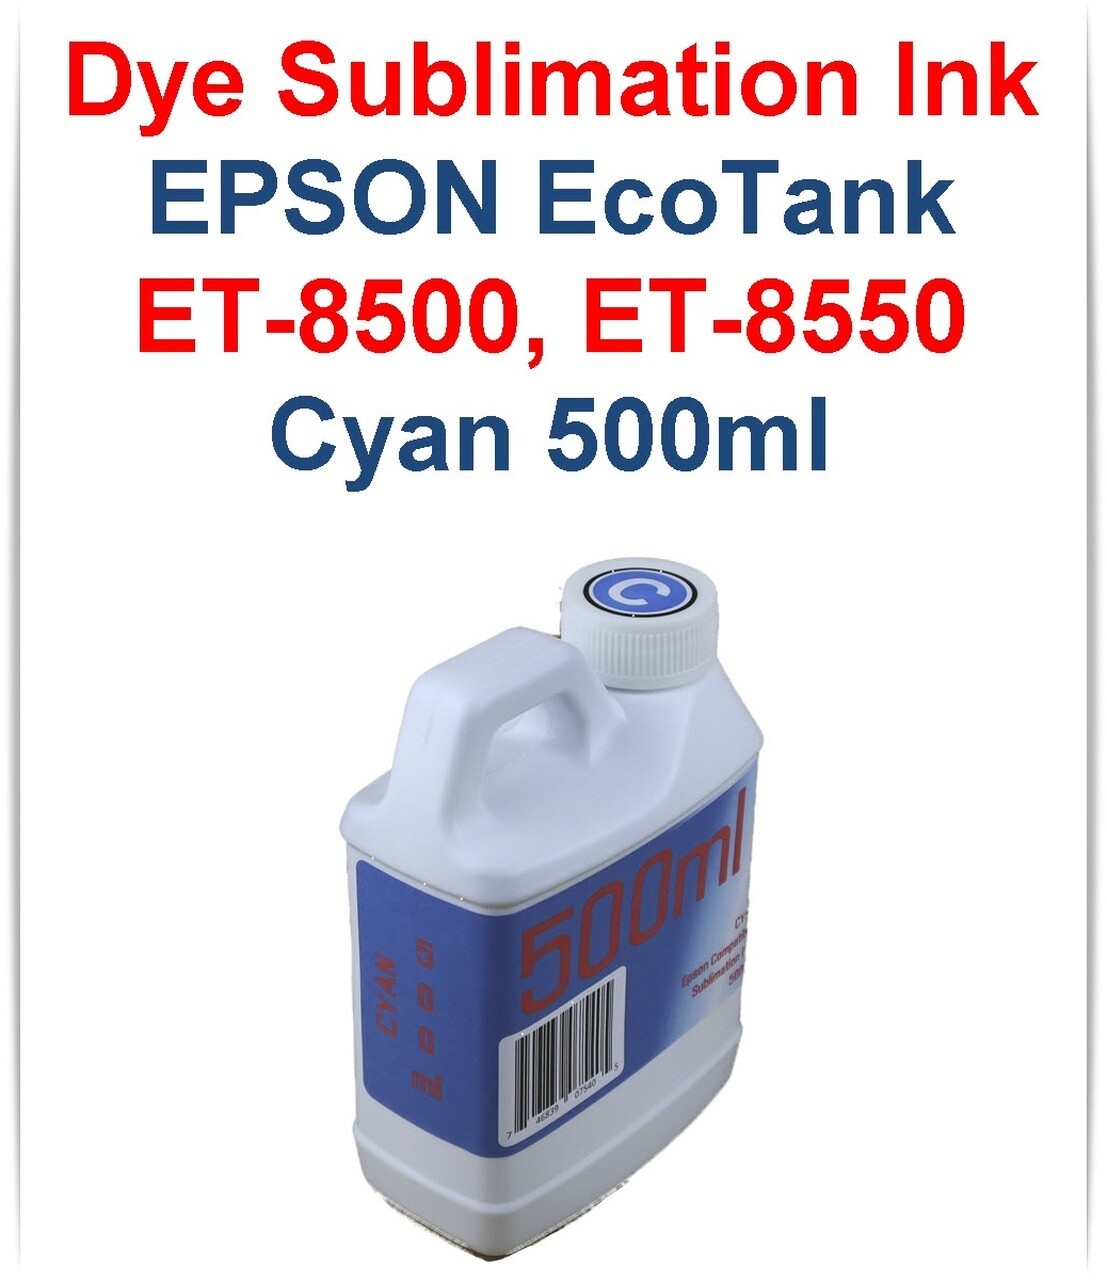 Cyan Dye Sublimation Ink 500ml bottle for EPSON EcoTank ET-8500 ET-8550 printers